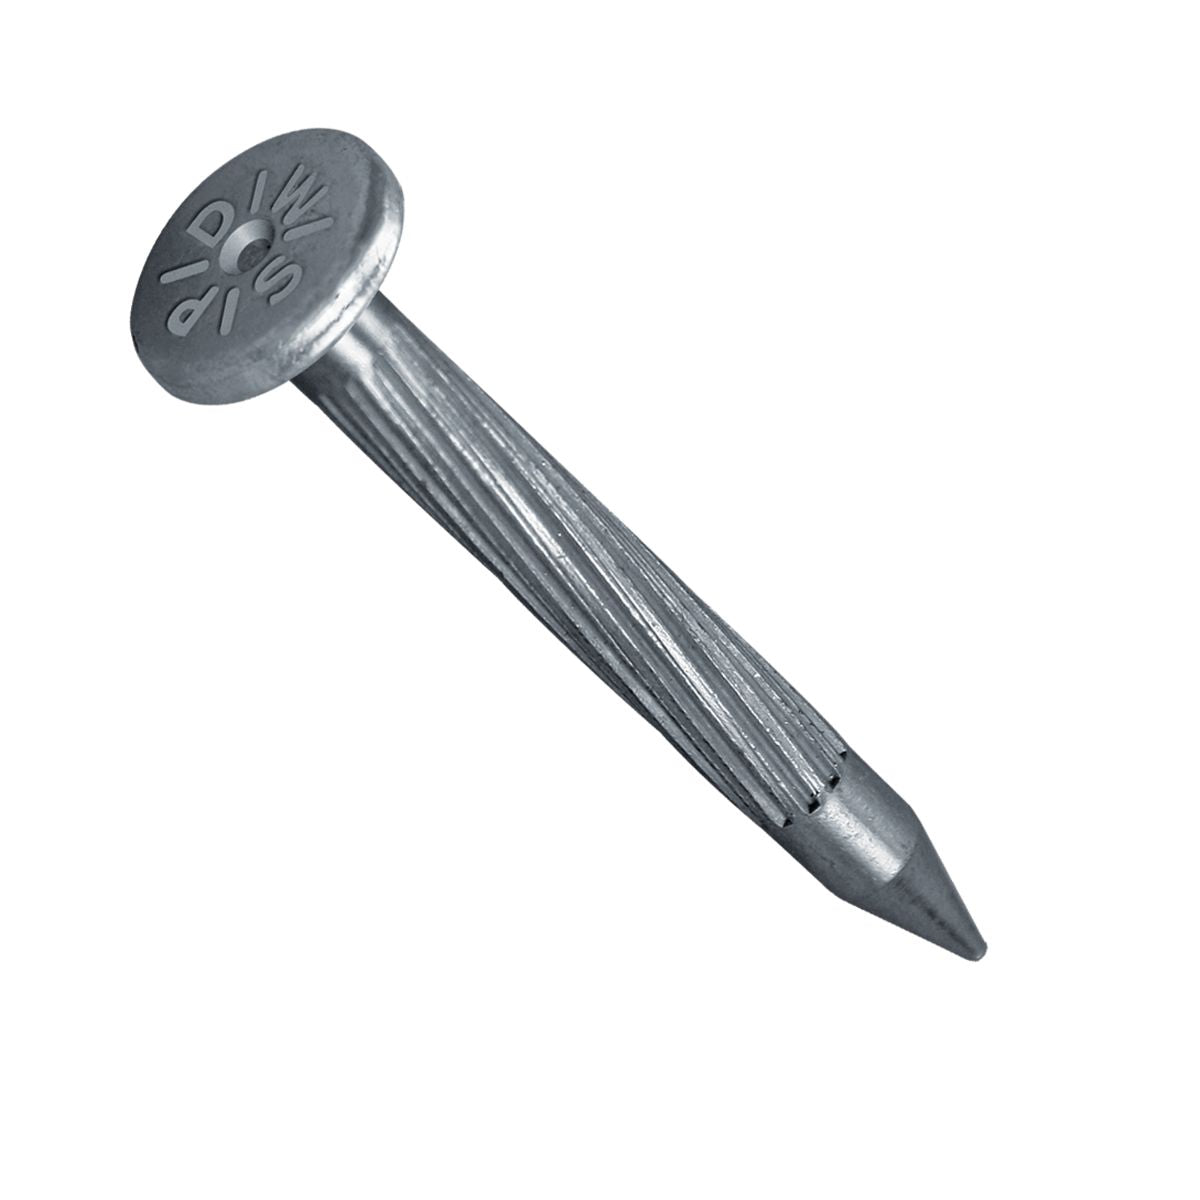 SitePro 20-756 Masonry Nail, 2-1/2-in (63.5mm)